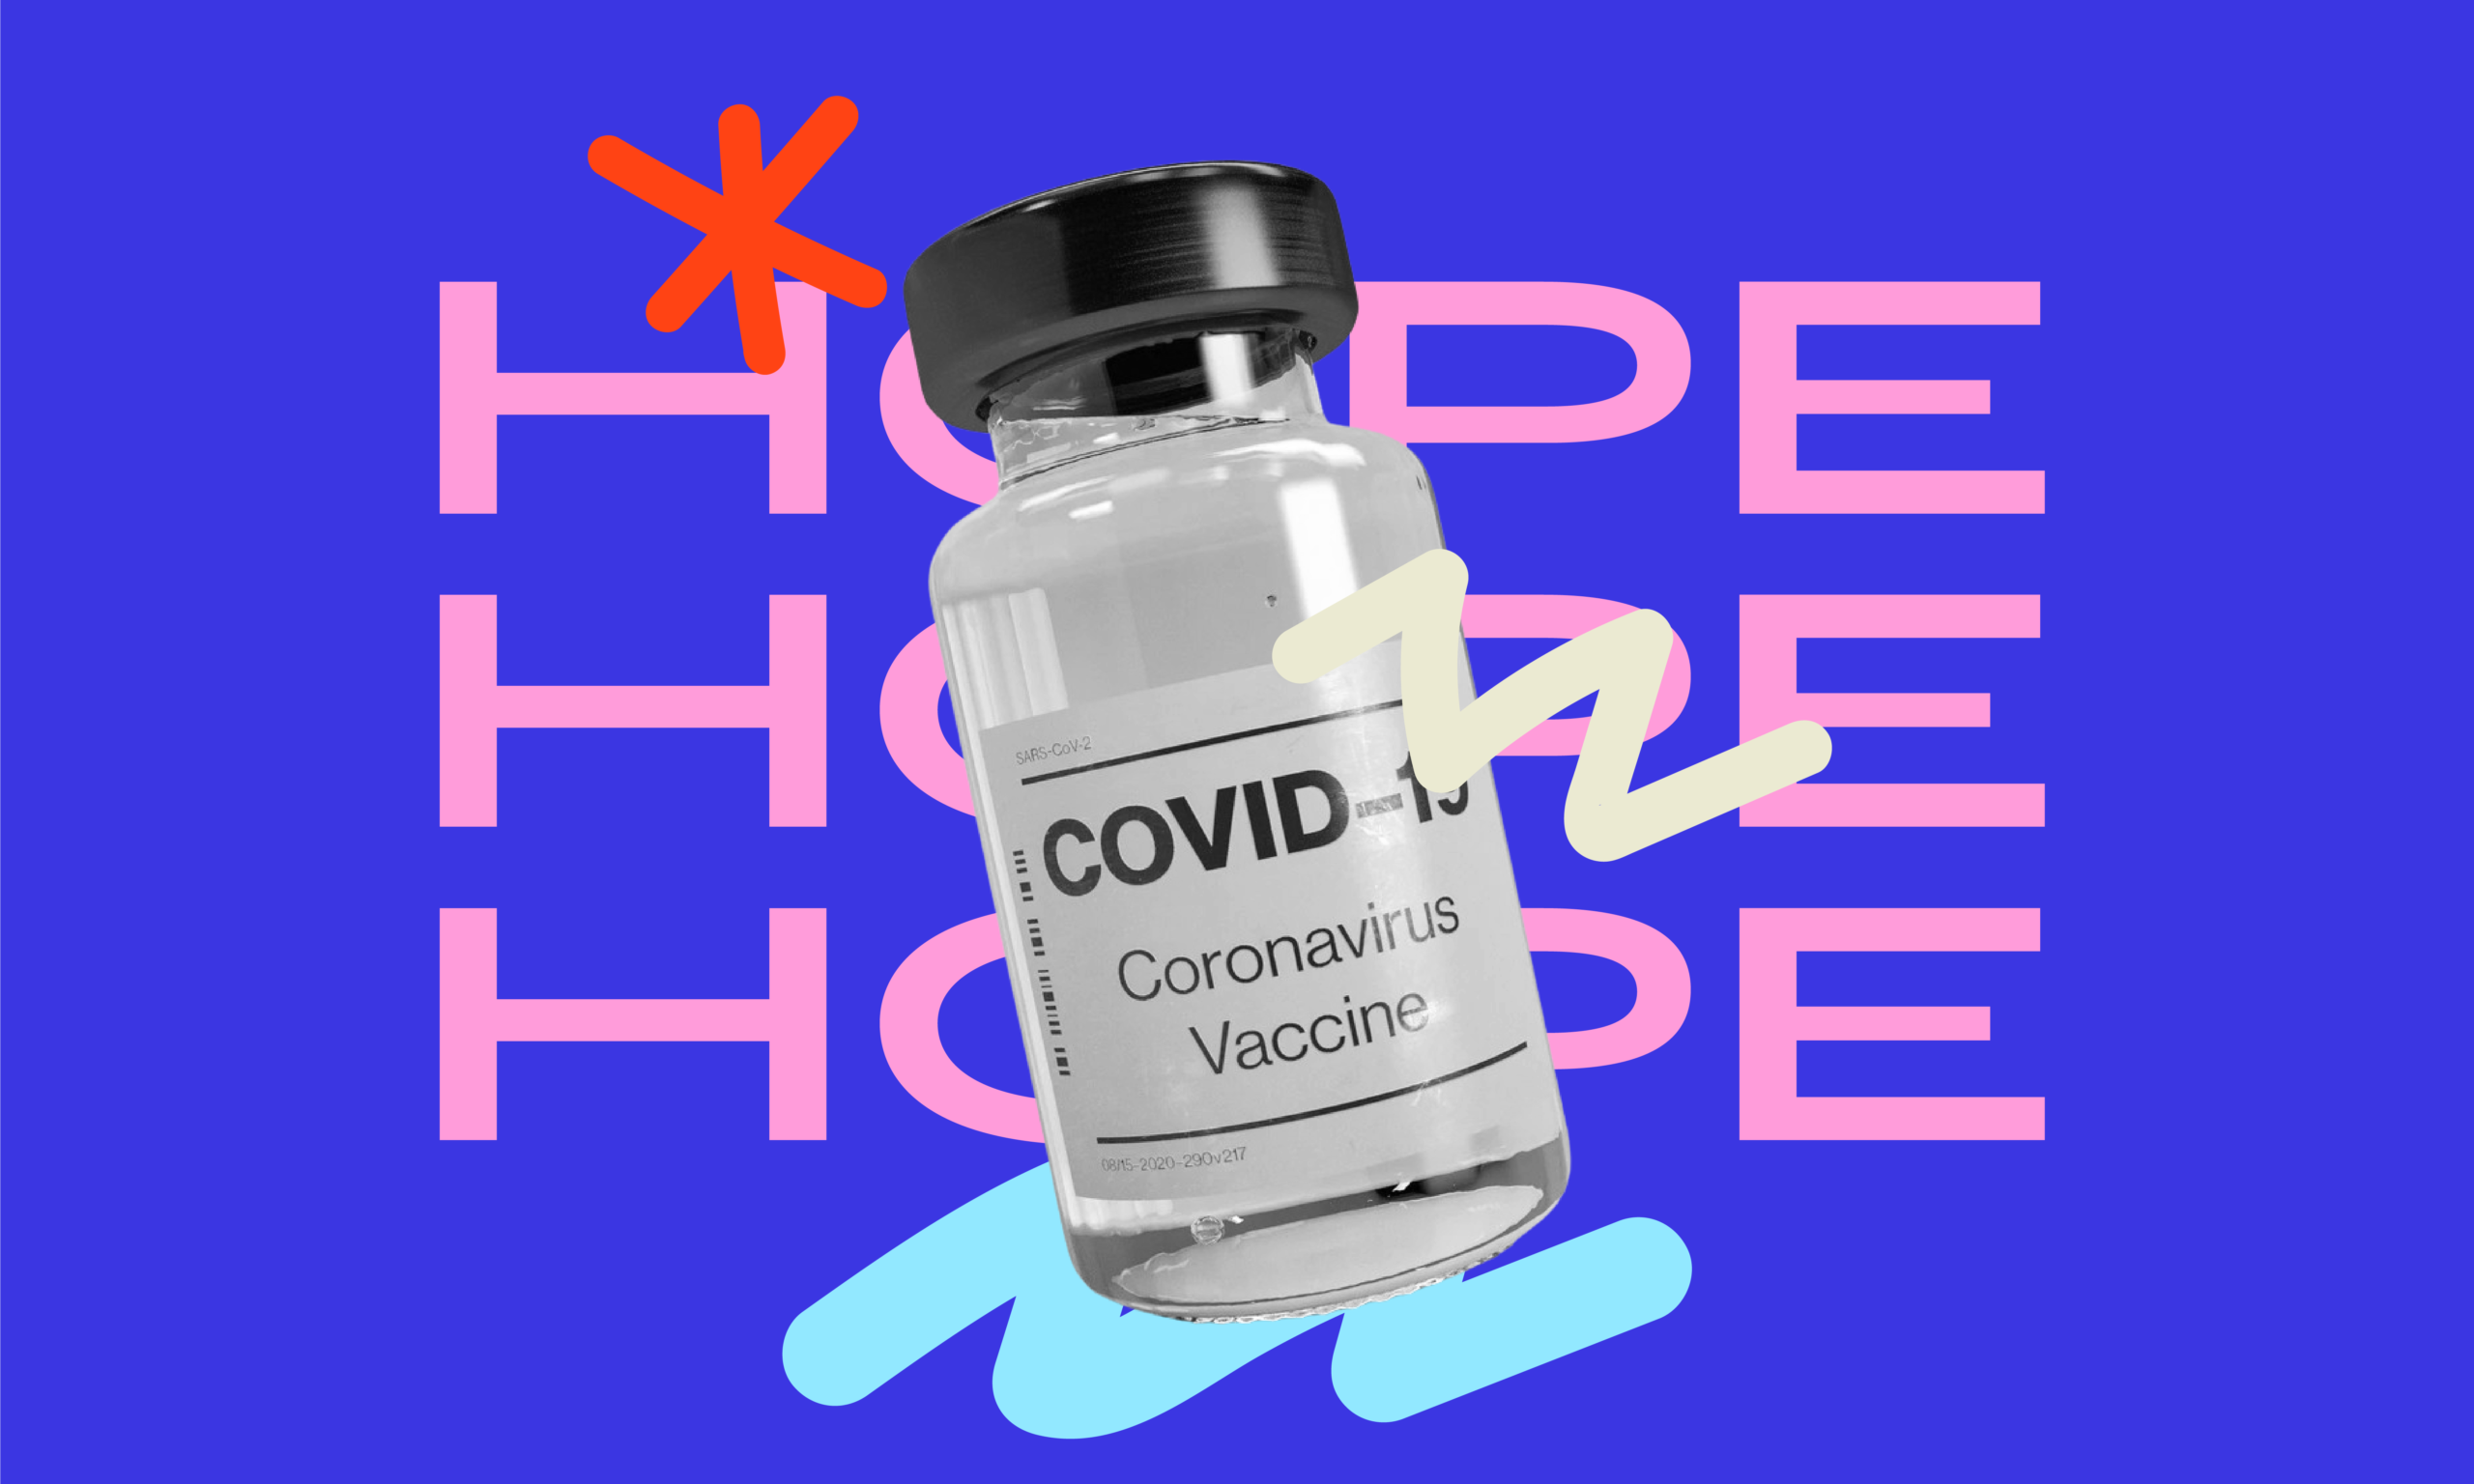 A COVID-19 vaccine bottle